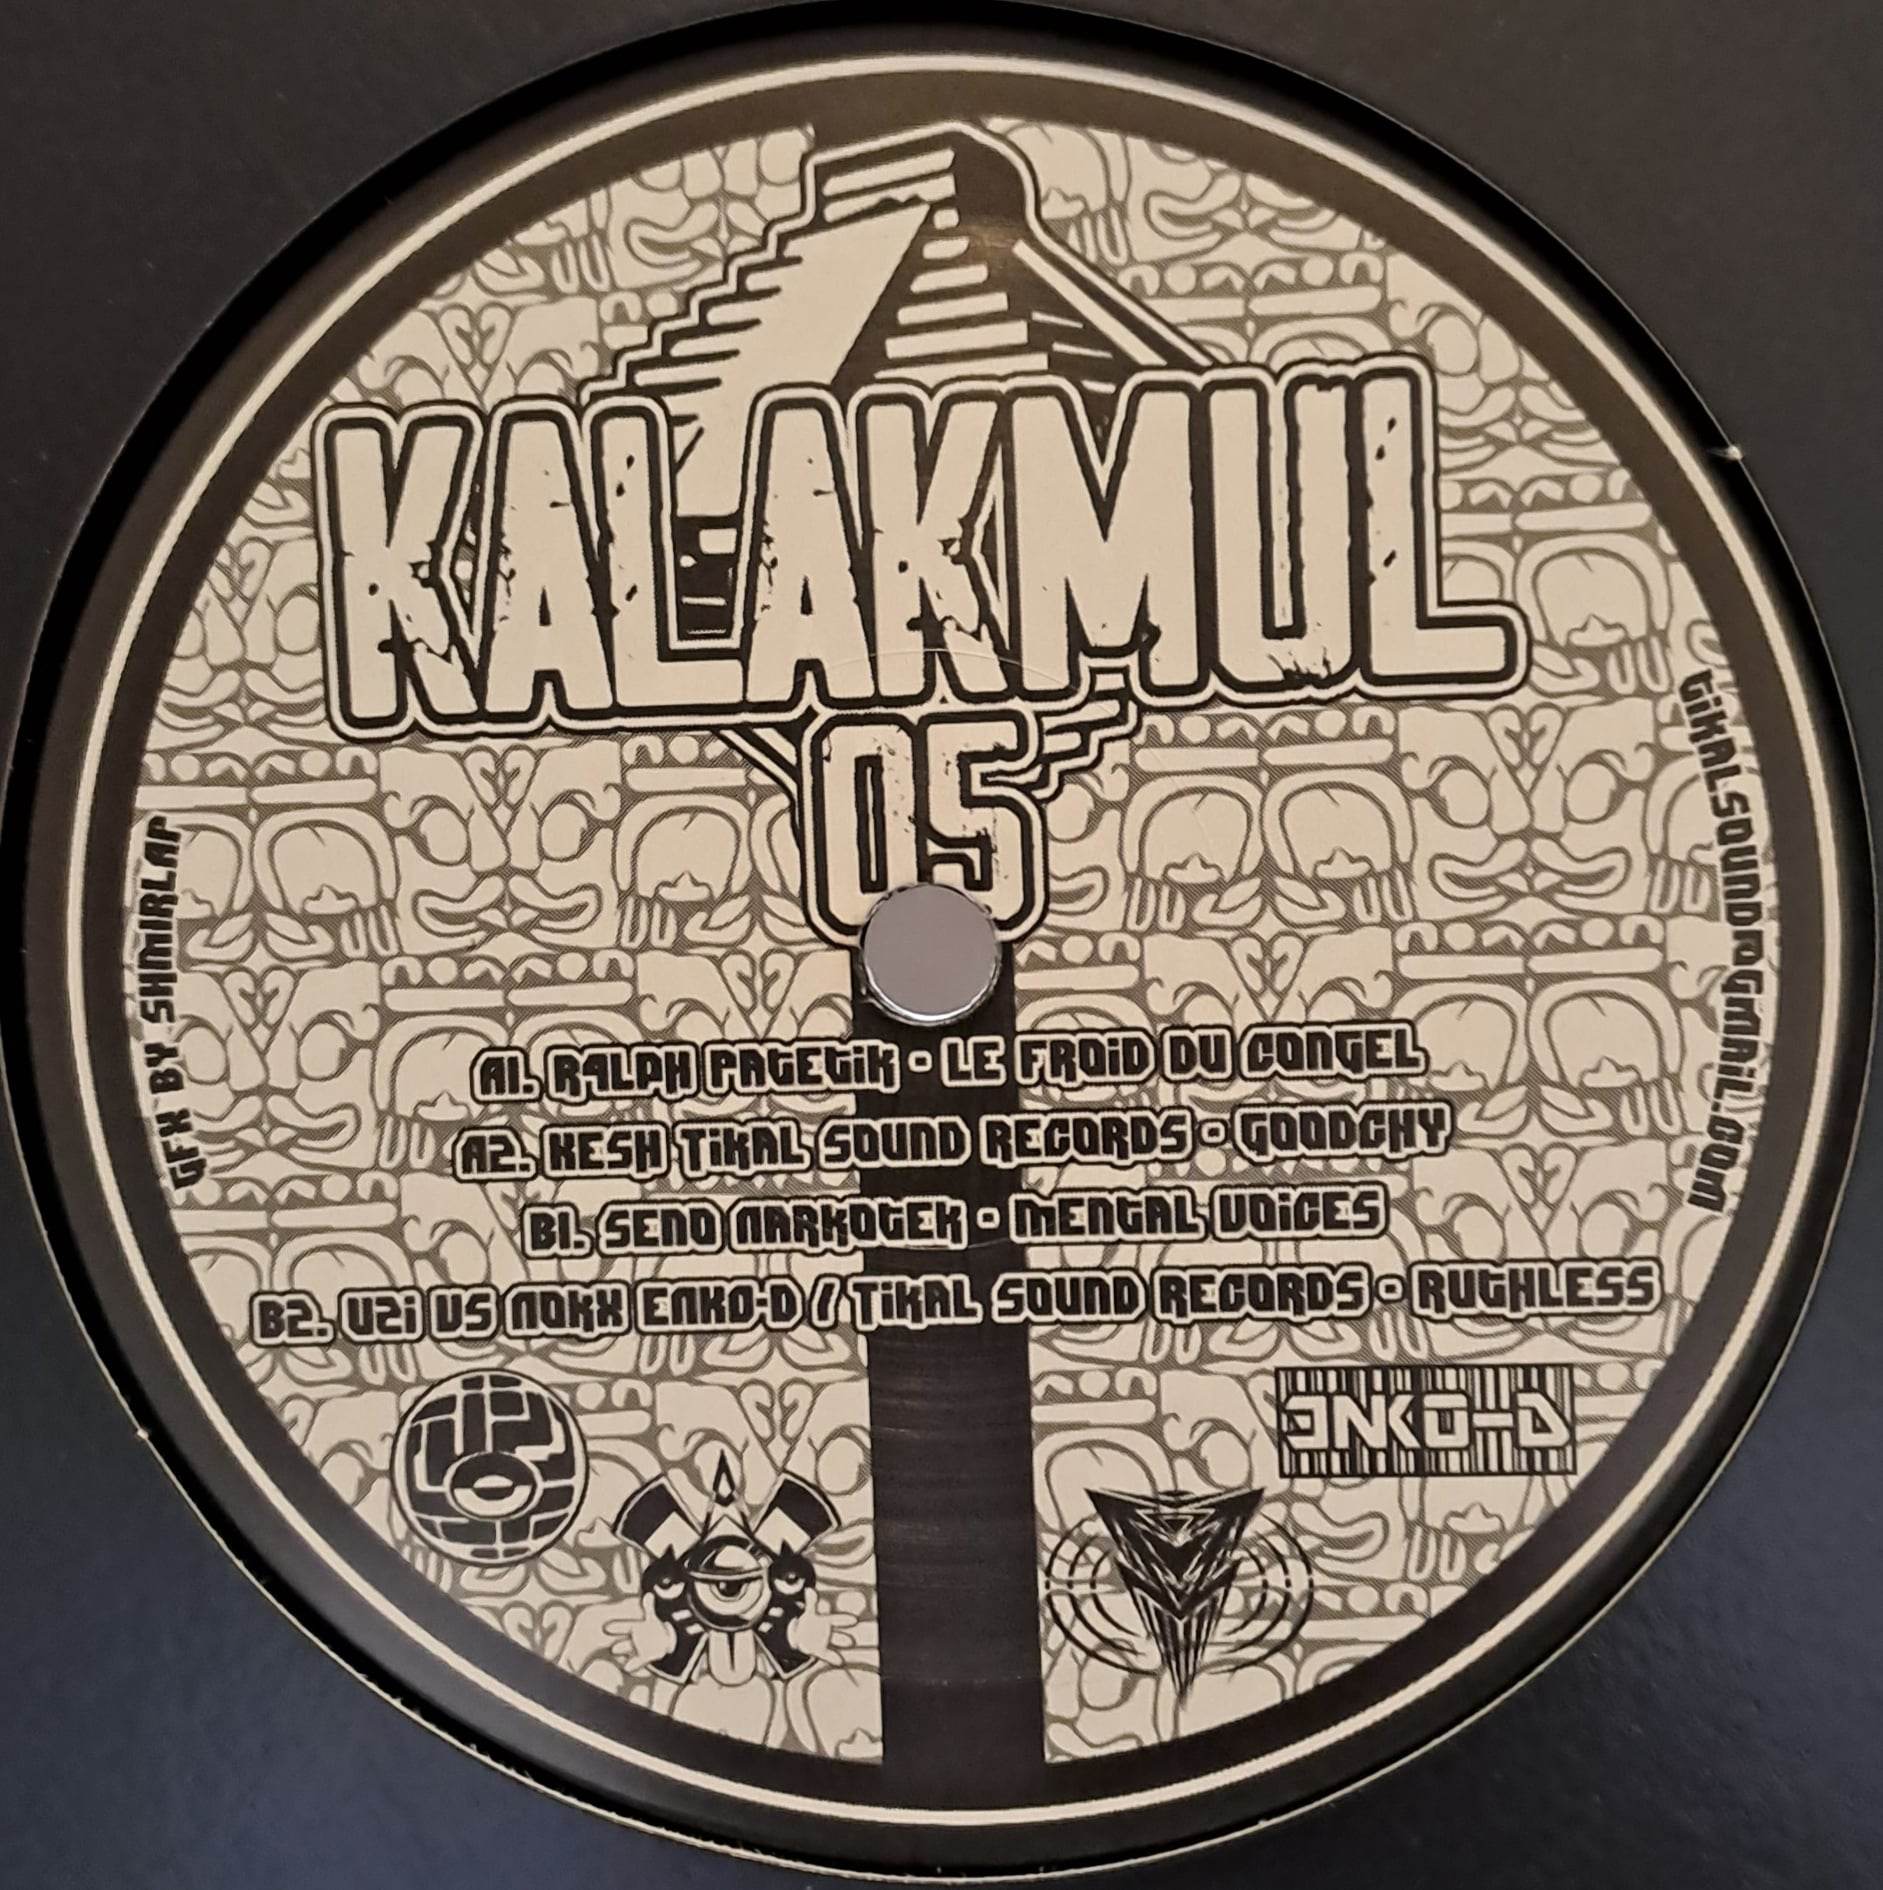 Kalakmul 05 - vinyle freetekno